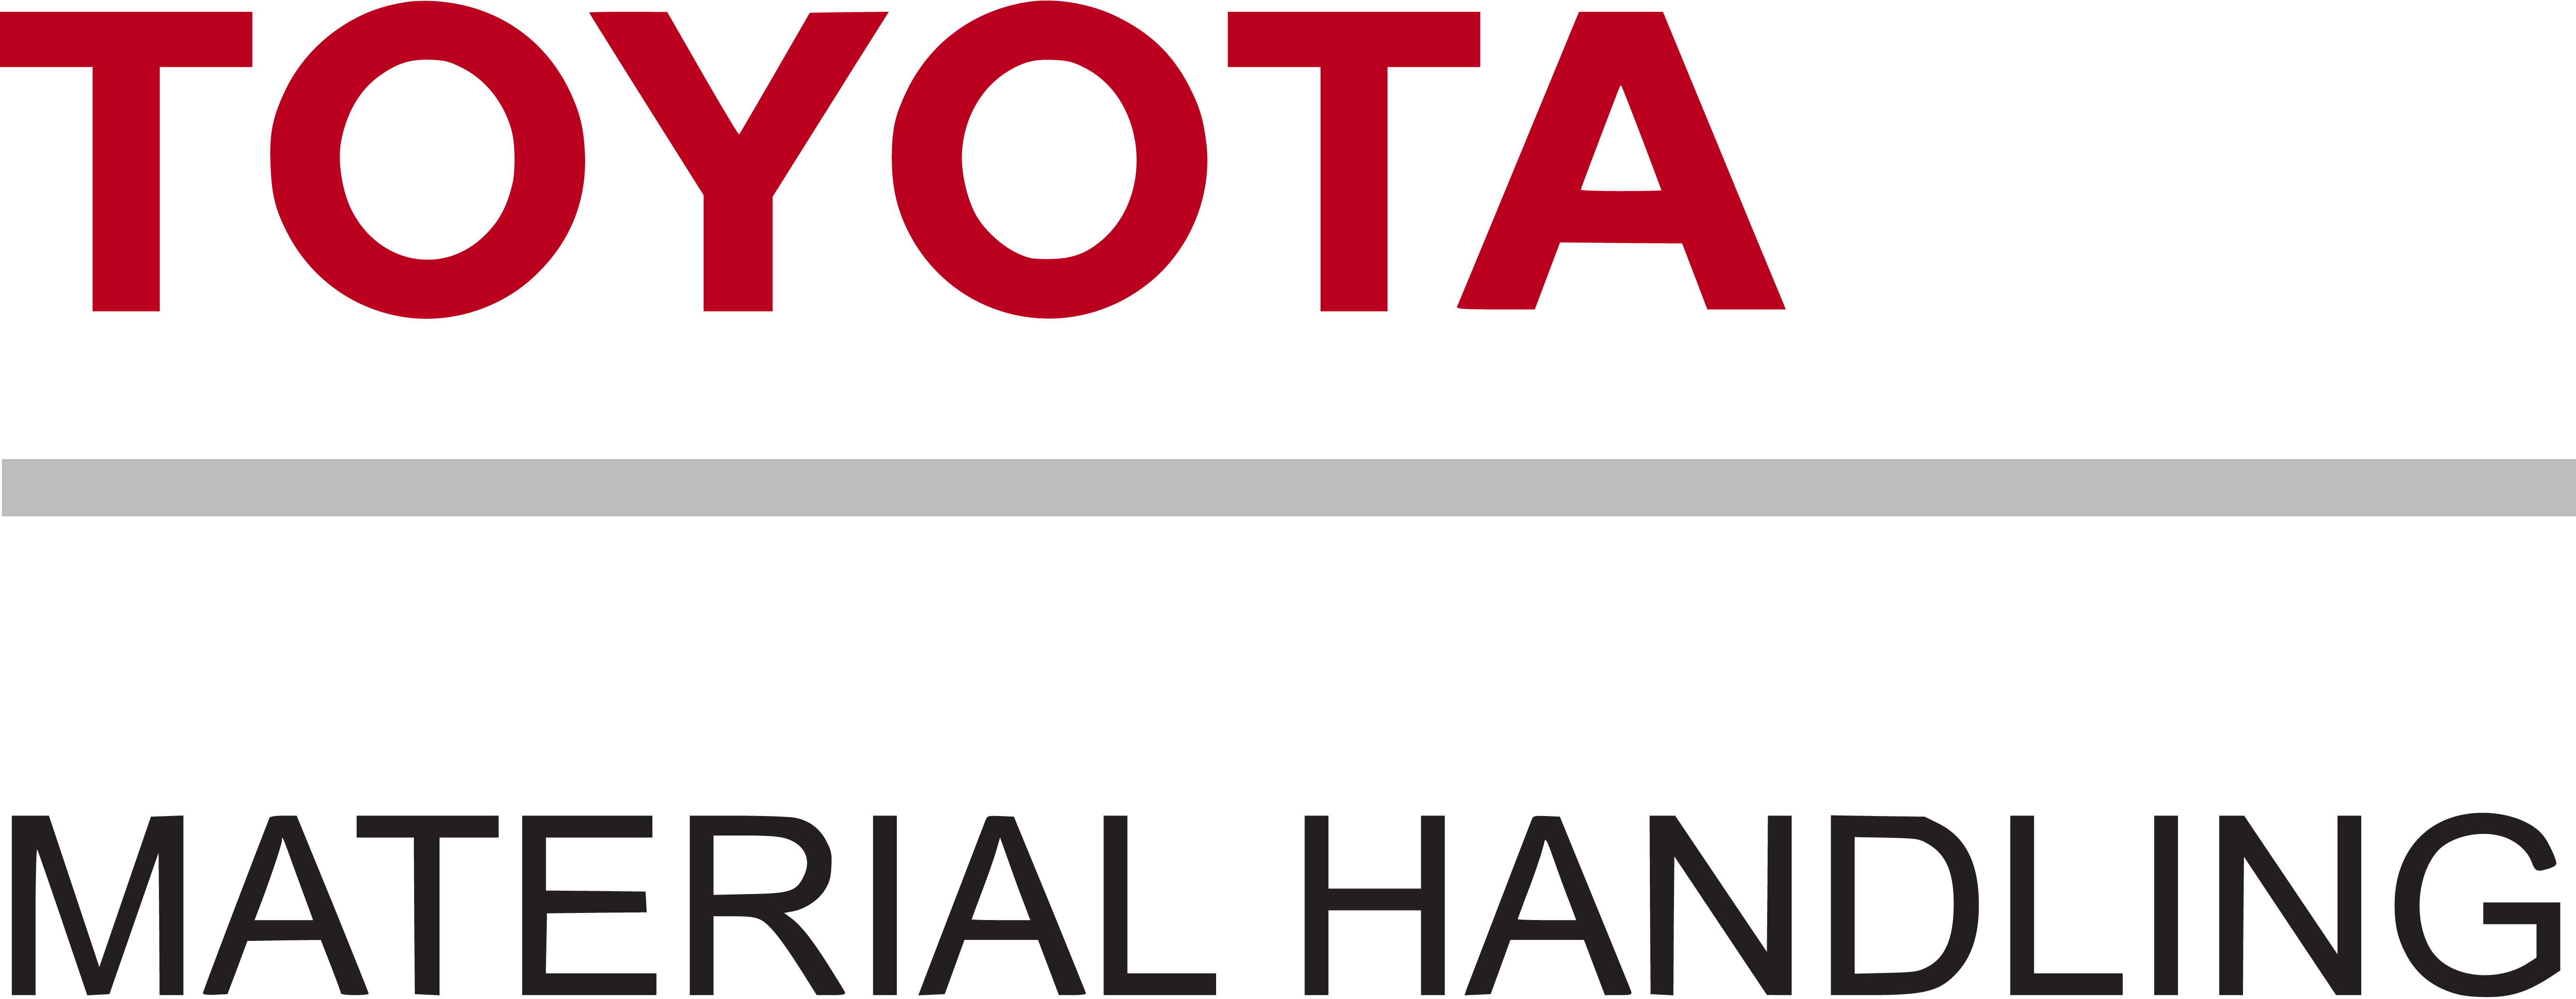 Toyota-Material-Handling-logo